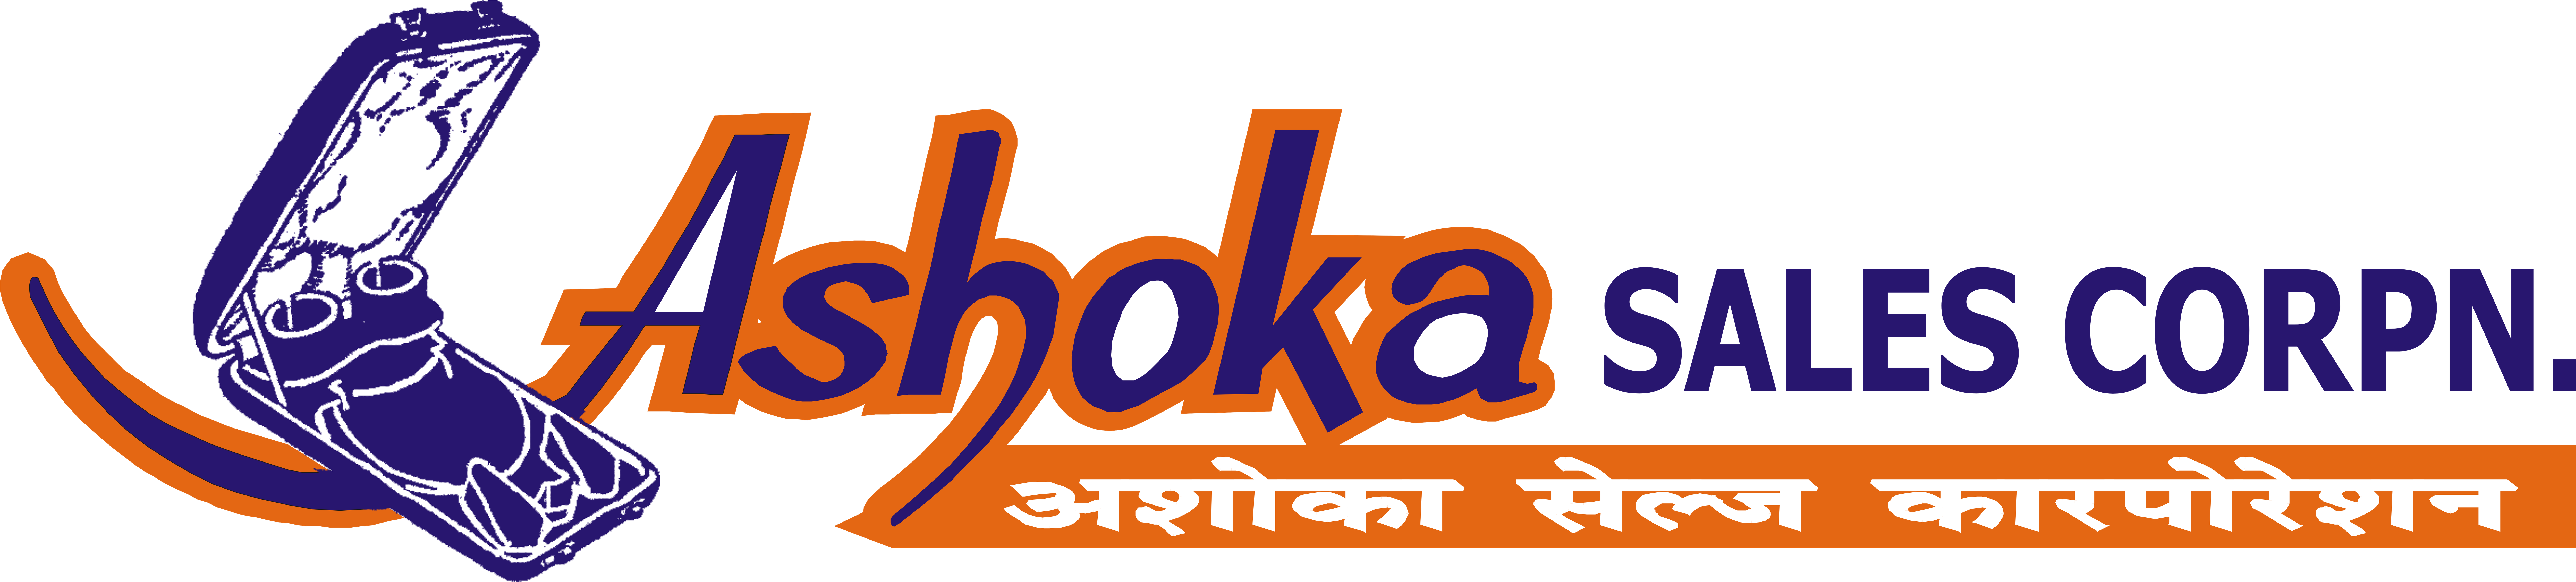 Ashoka Sales Corporation